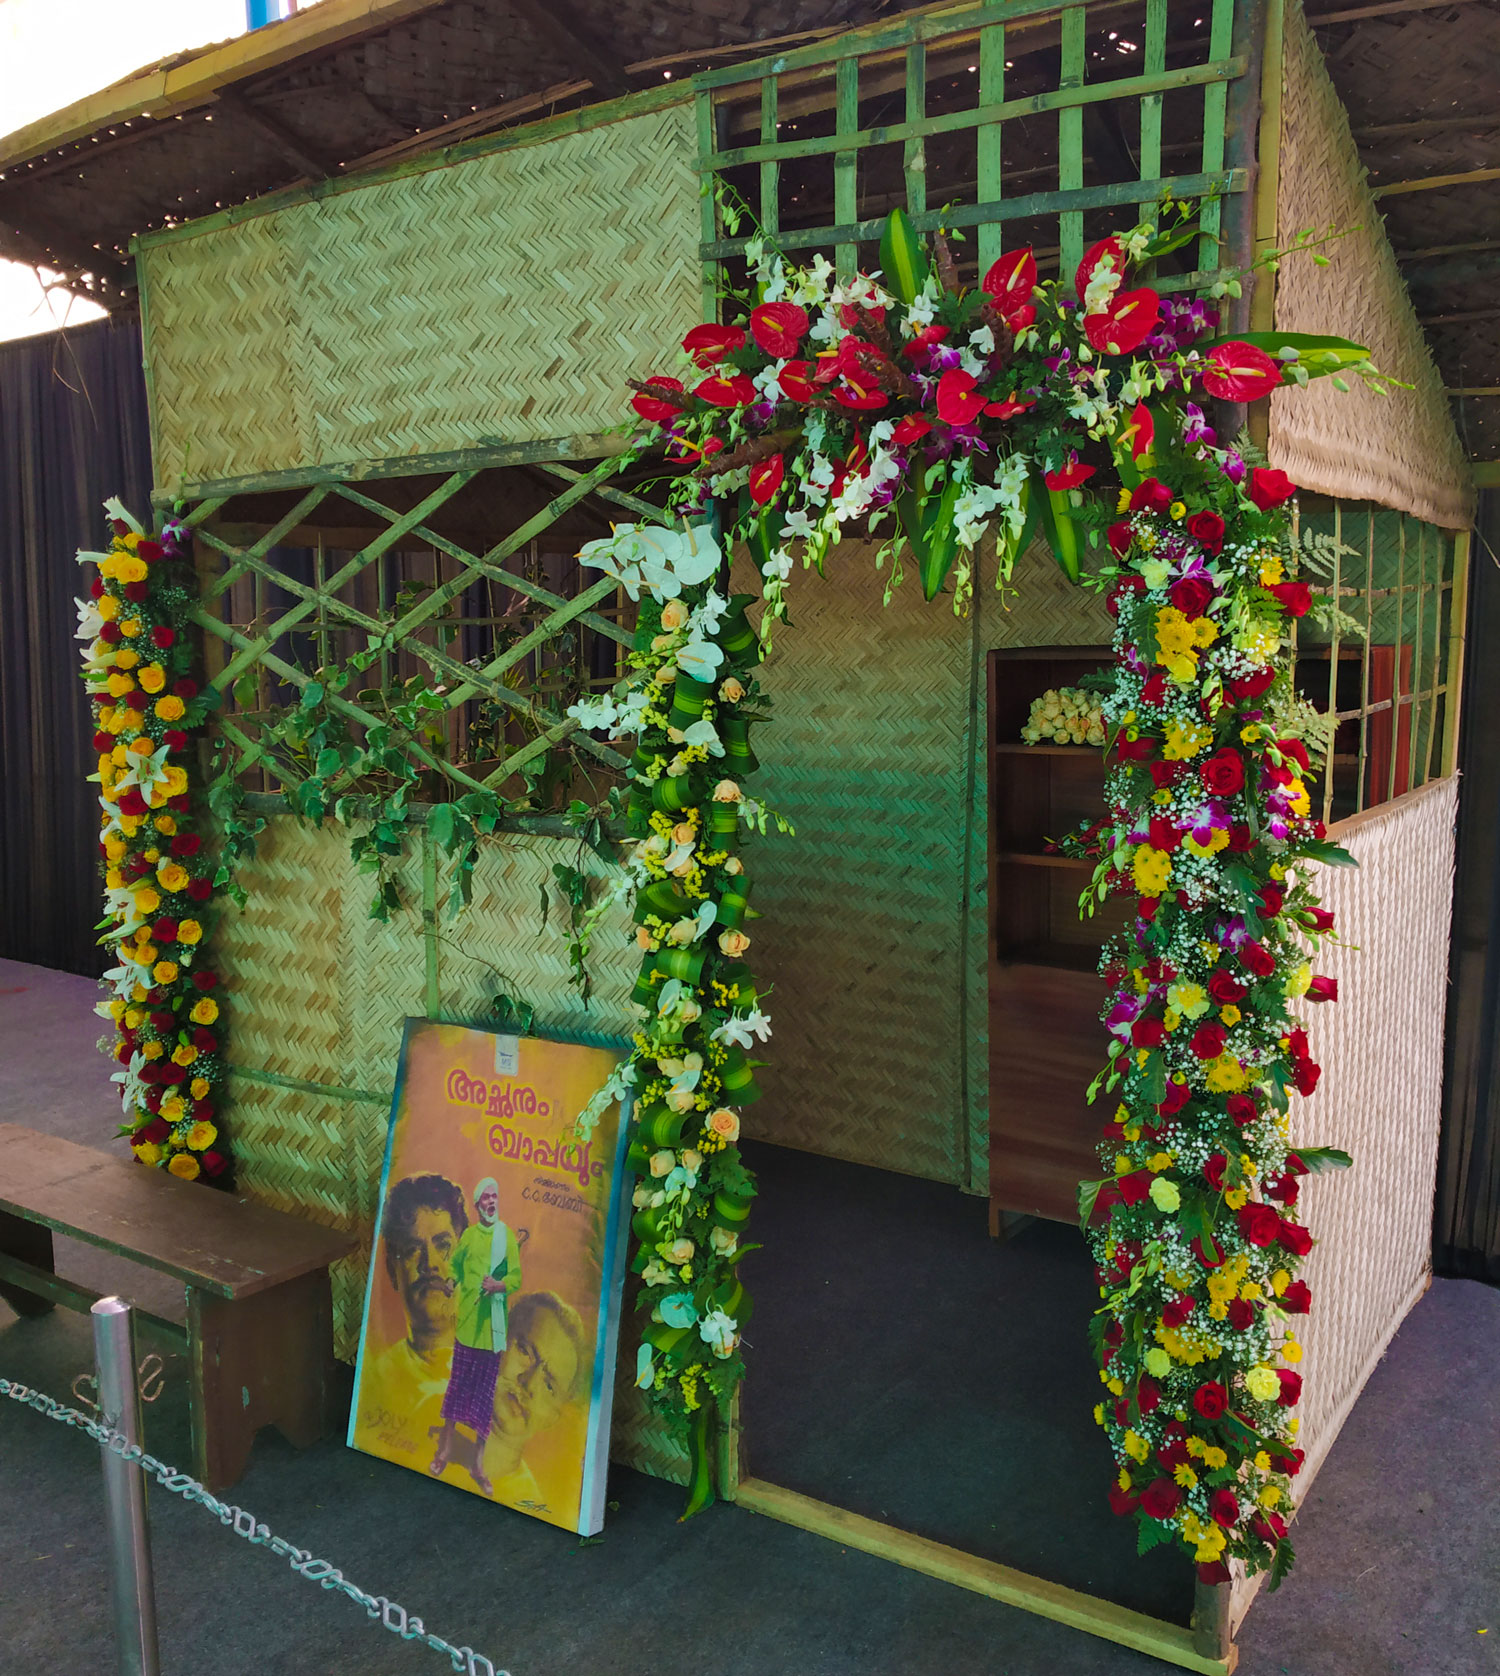 37th Cochin Flower Show